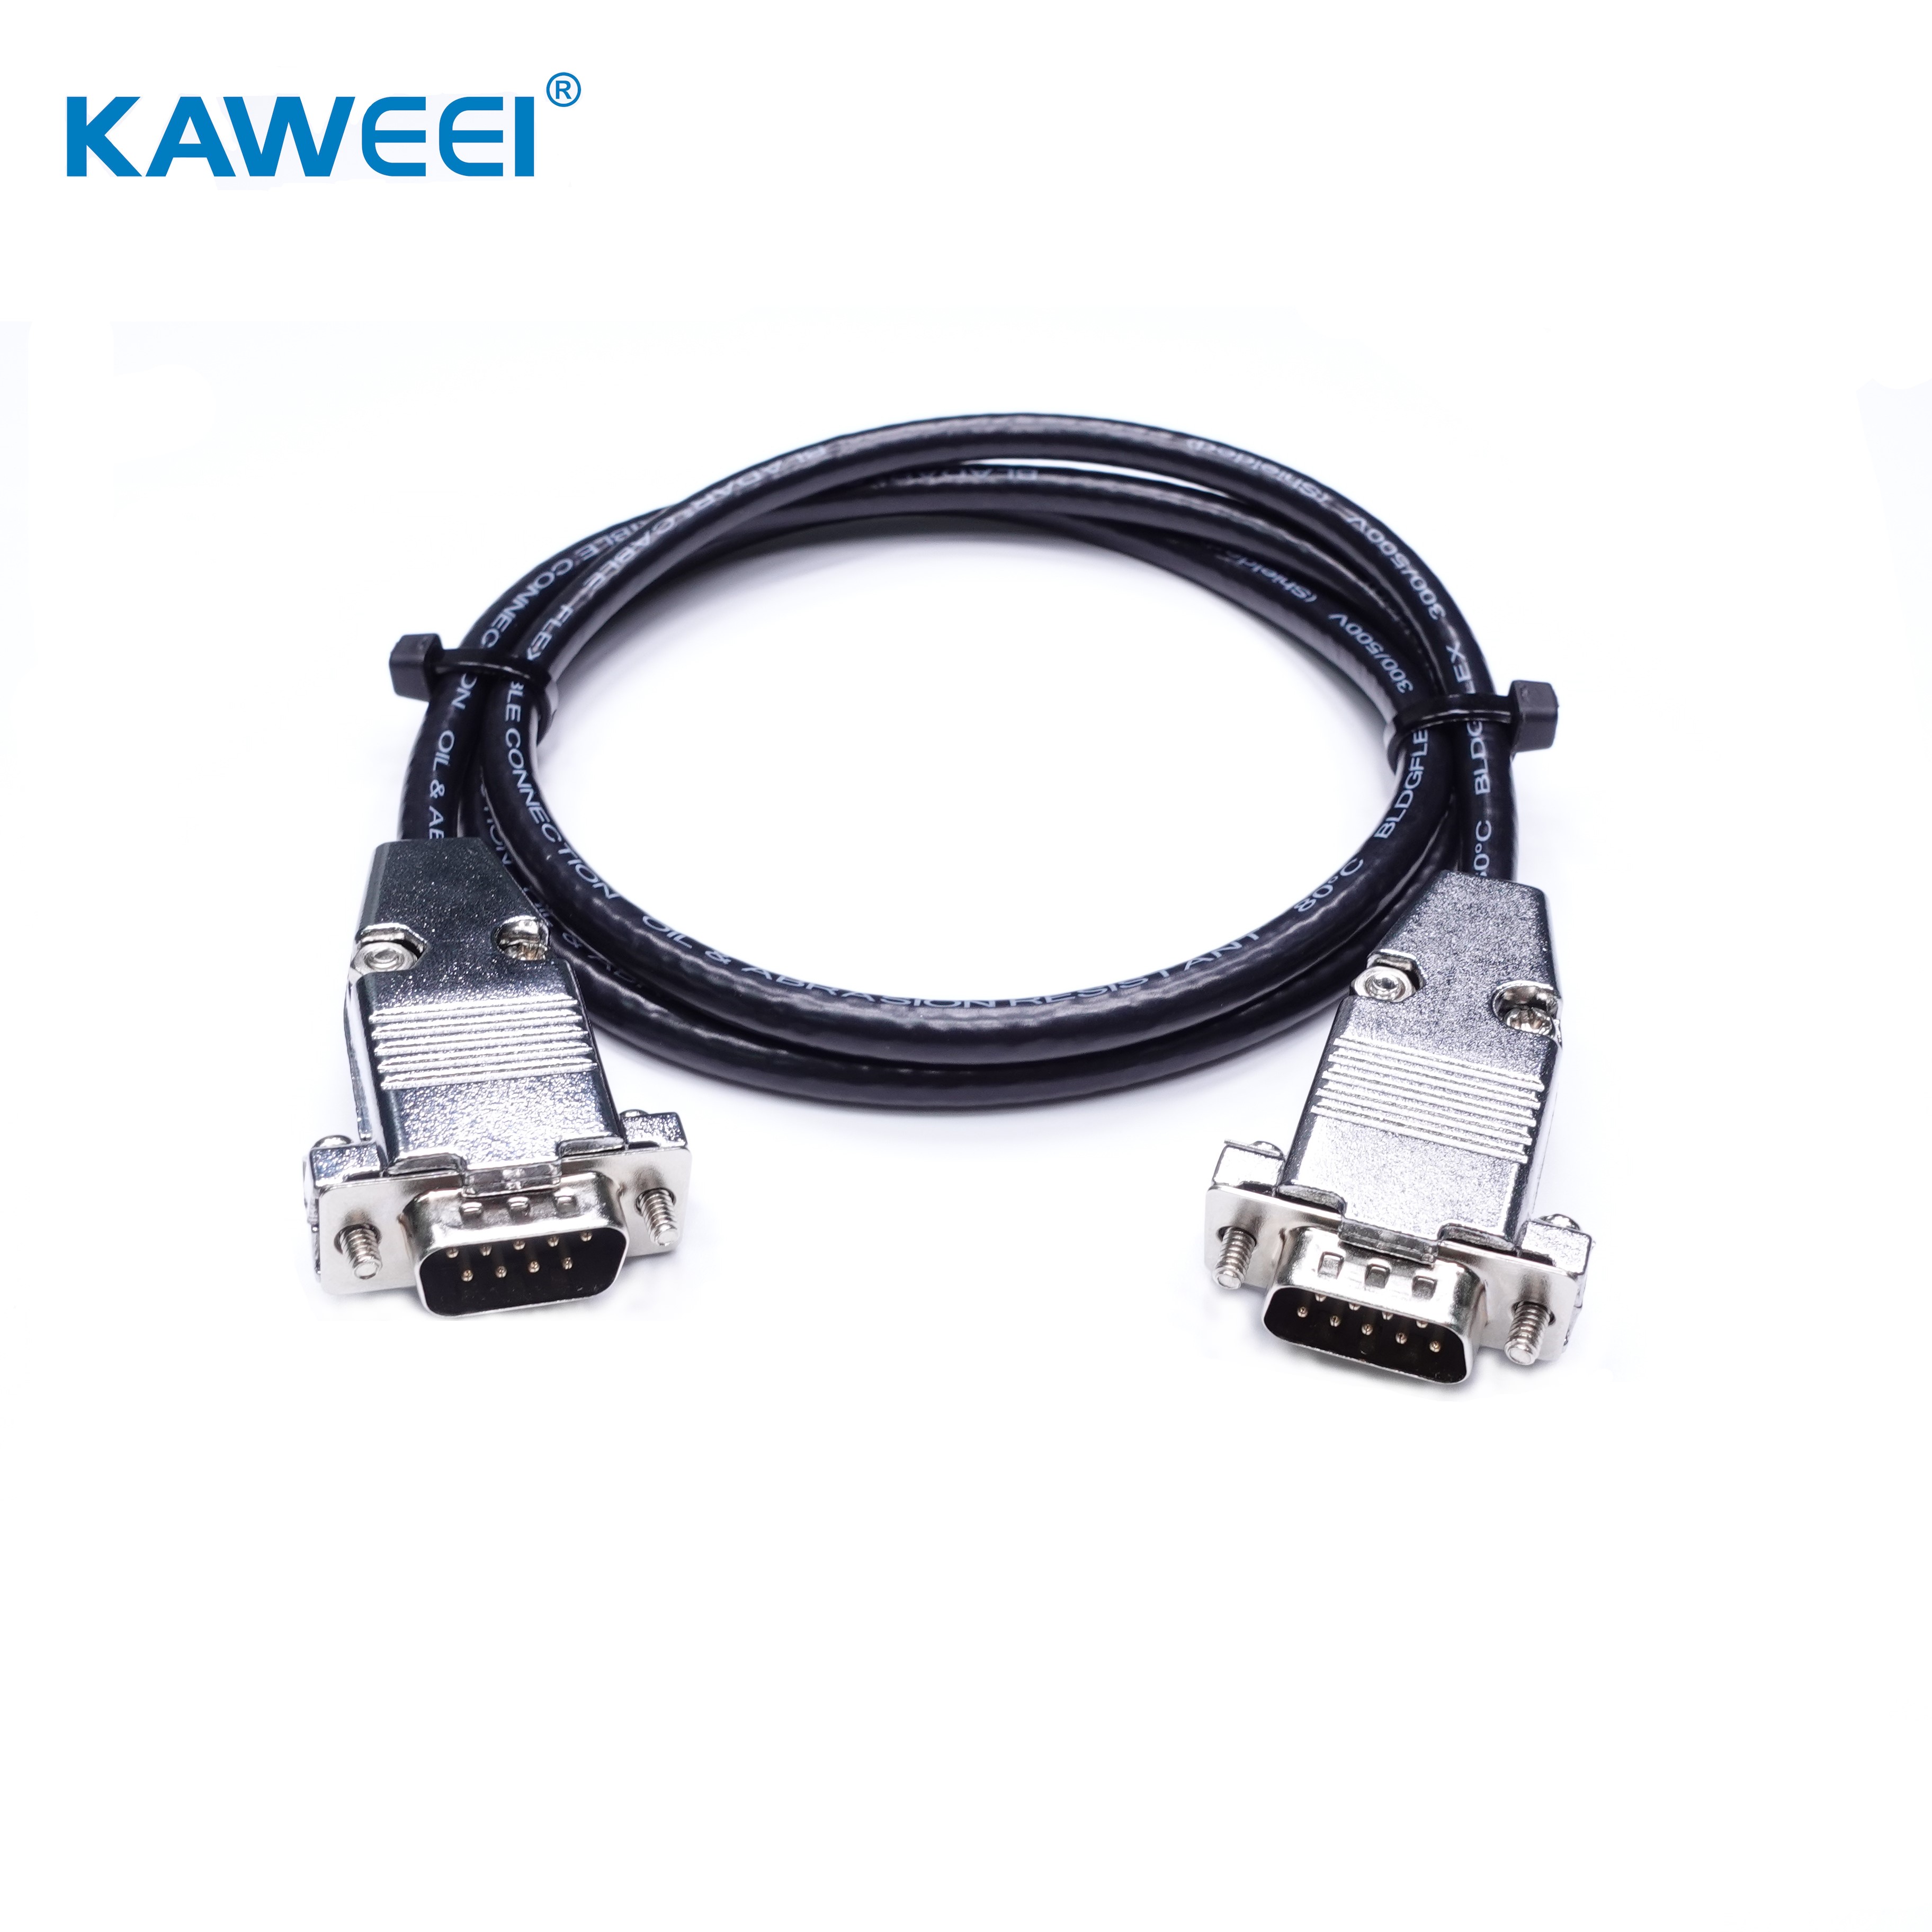 Rakitan kabel komunikasi rakitan kabel Display 9PIN D-SUB 9PIN Pria berkualitas tinggi